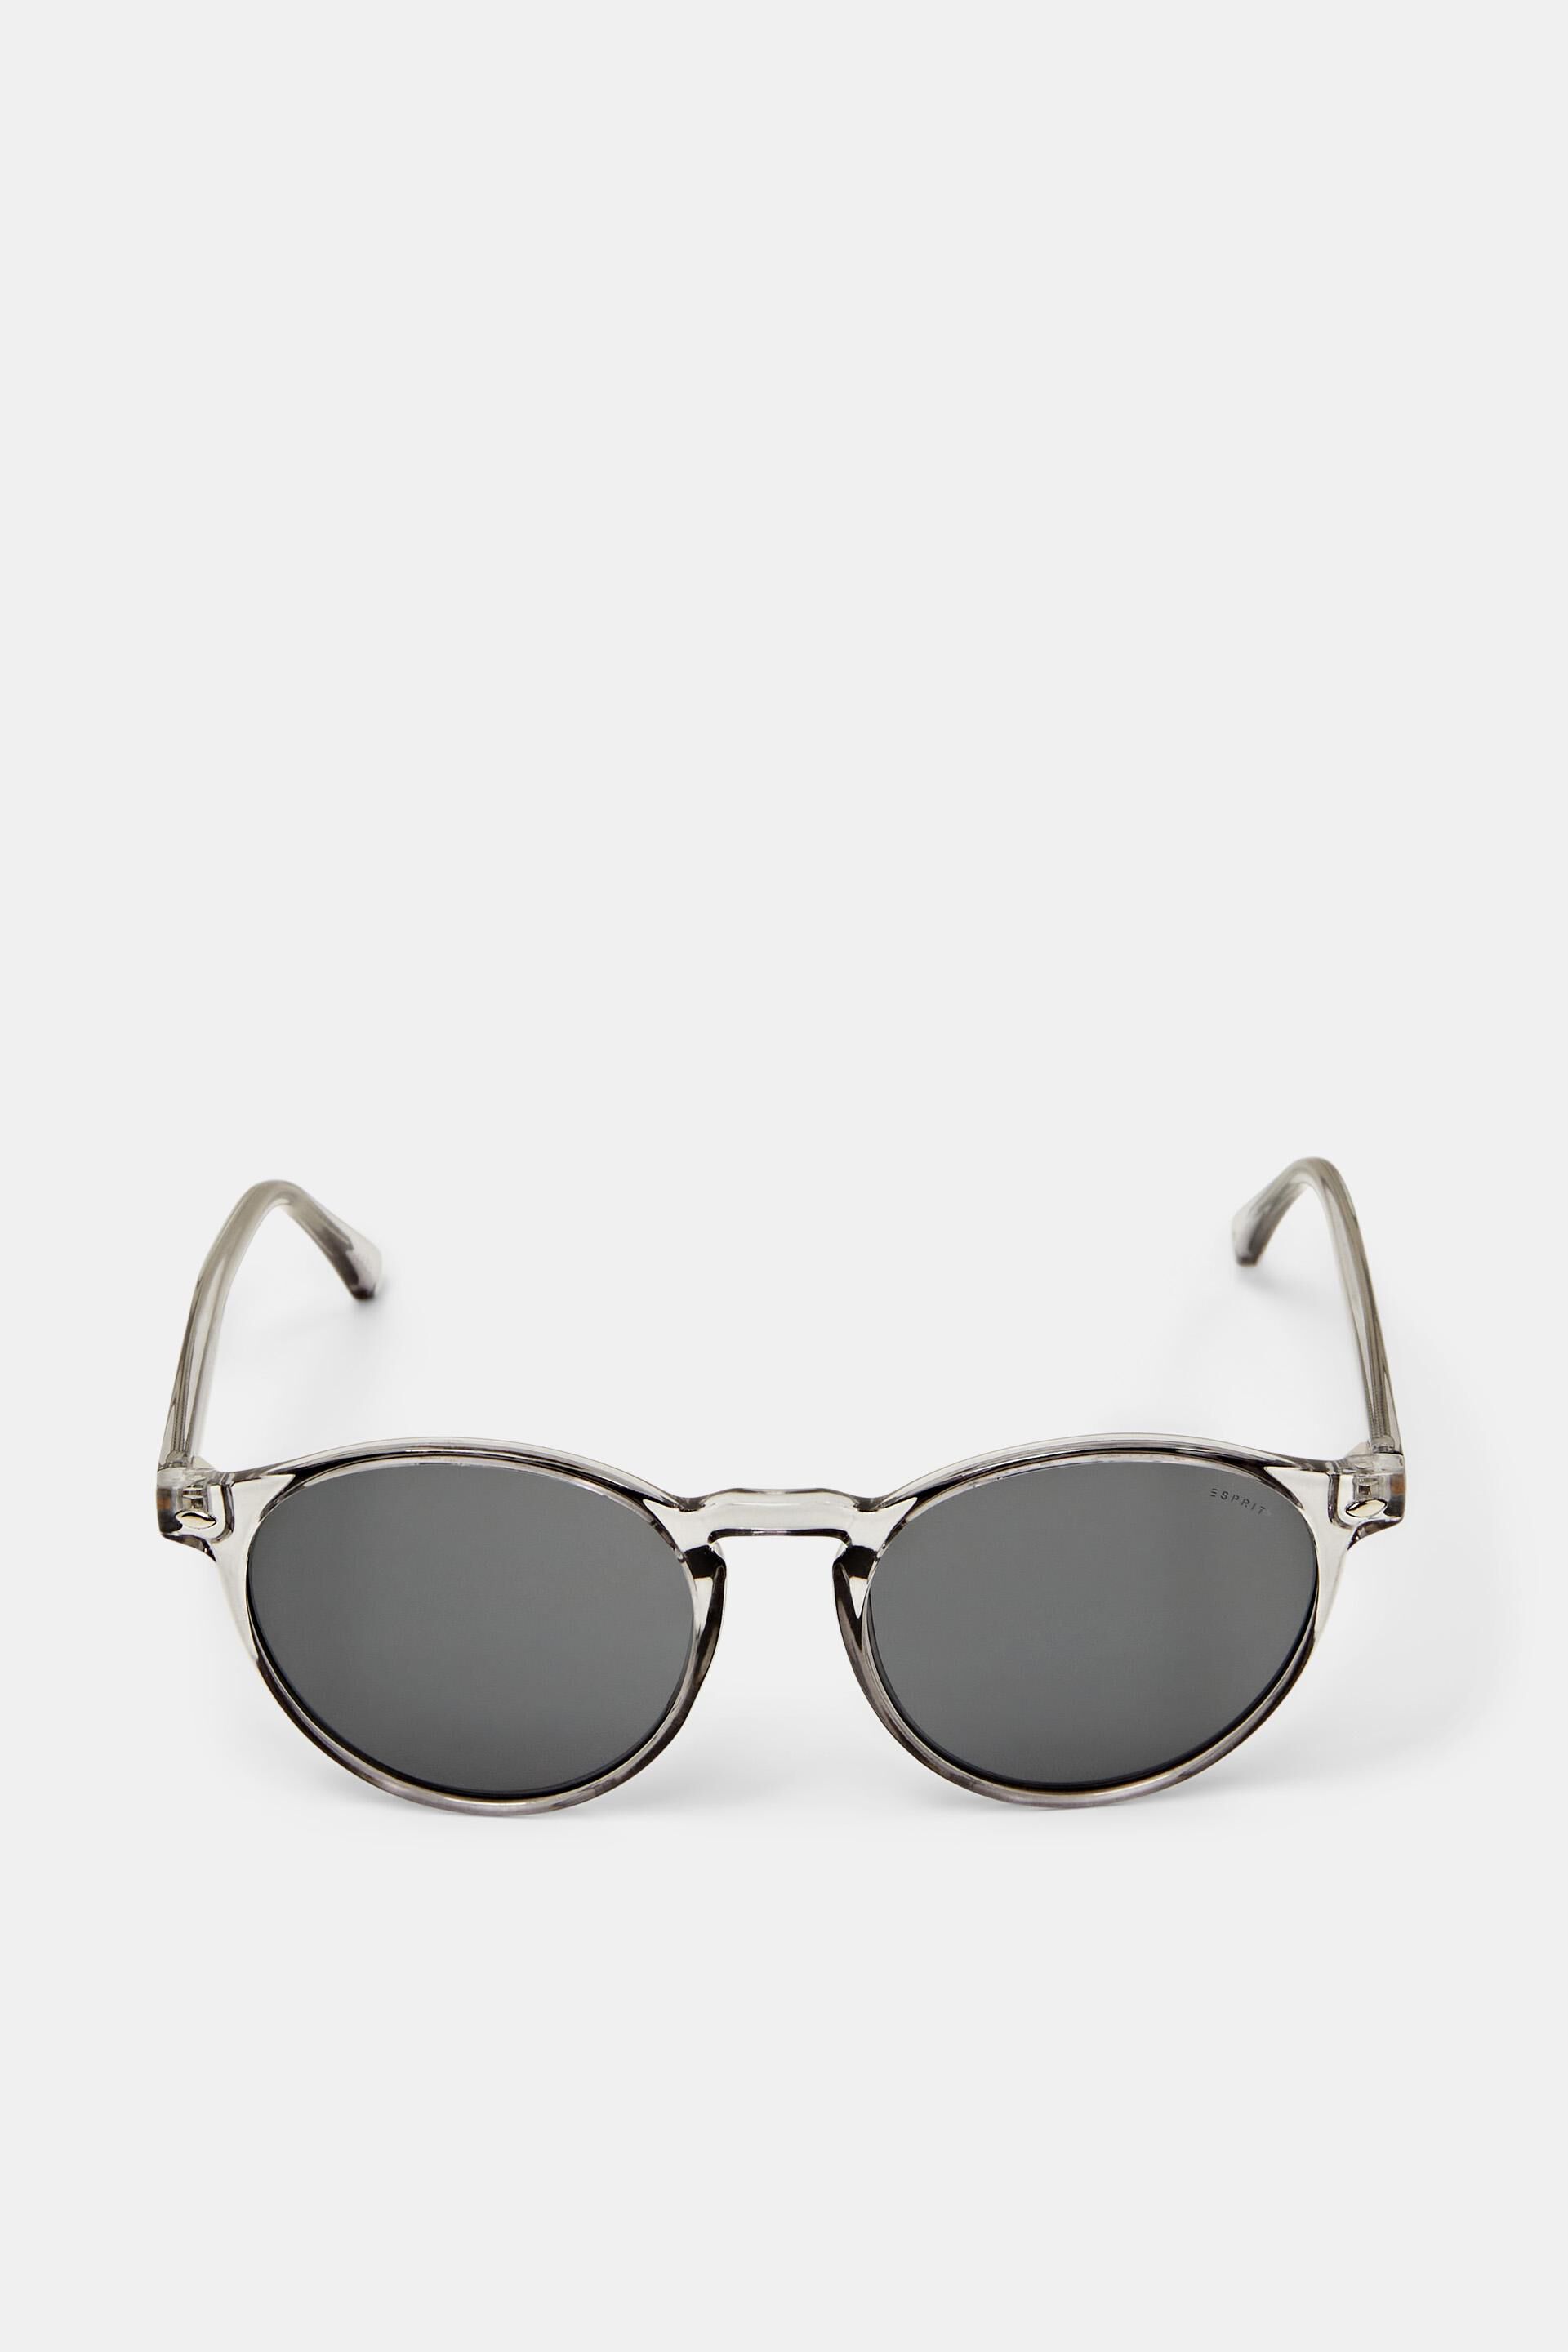 Esprit Mode Sonnenbrille mit transparentem rundem Rahmen